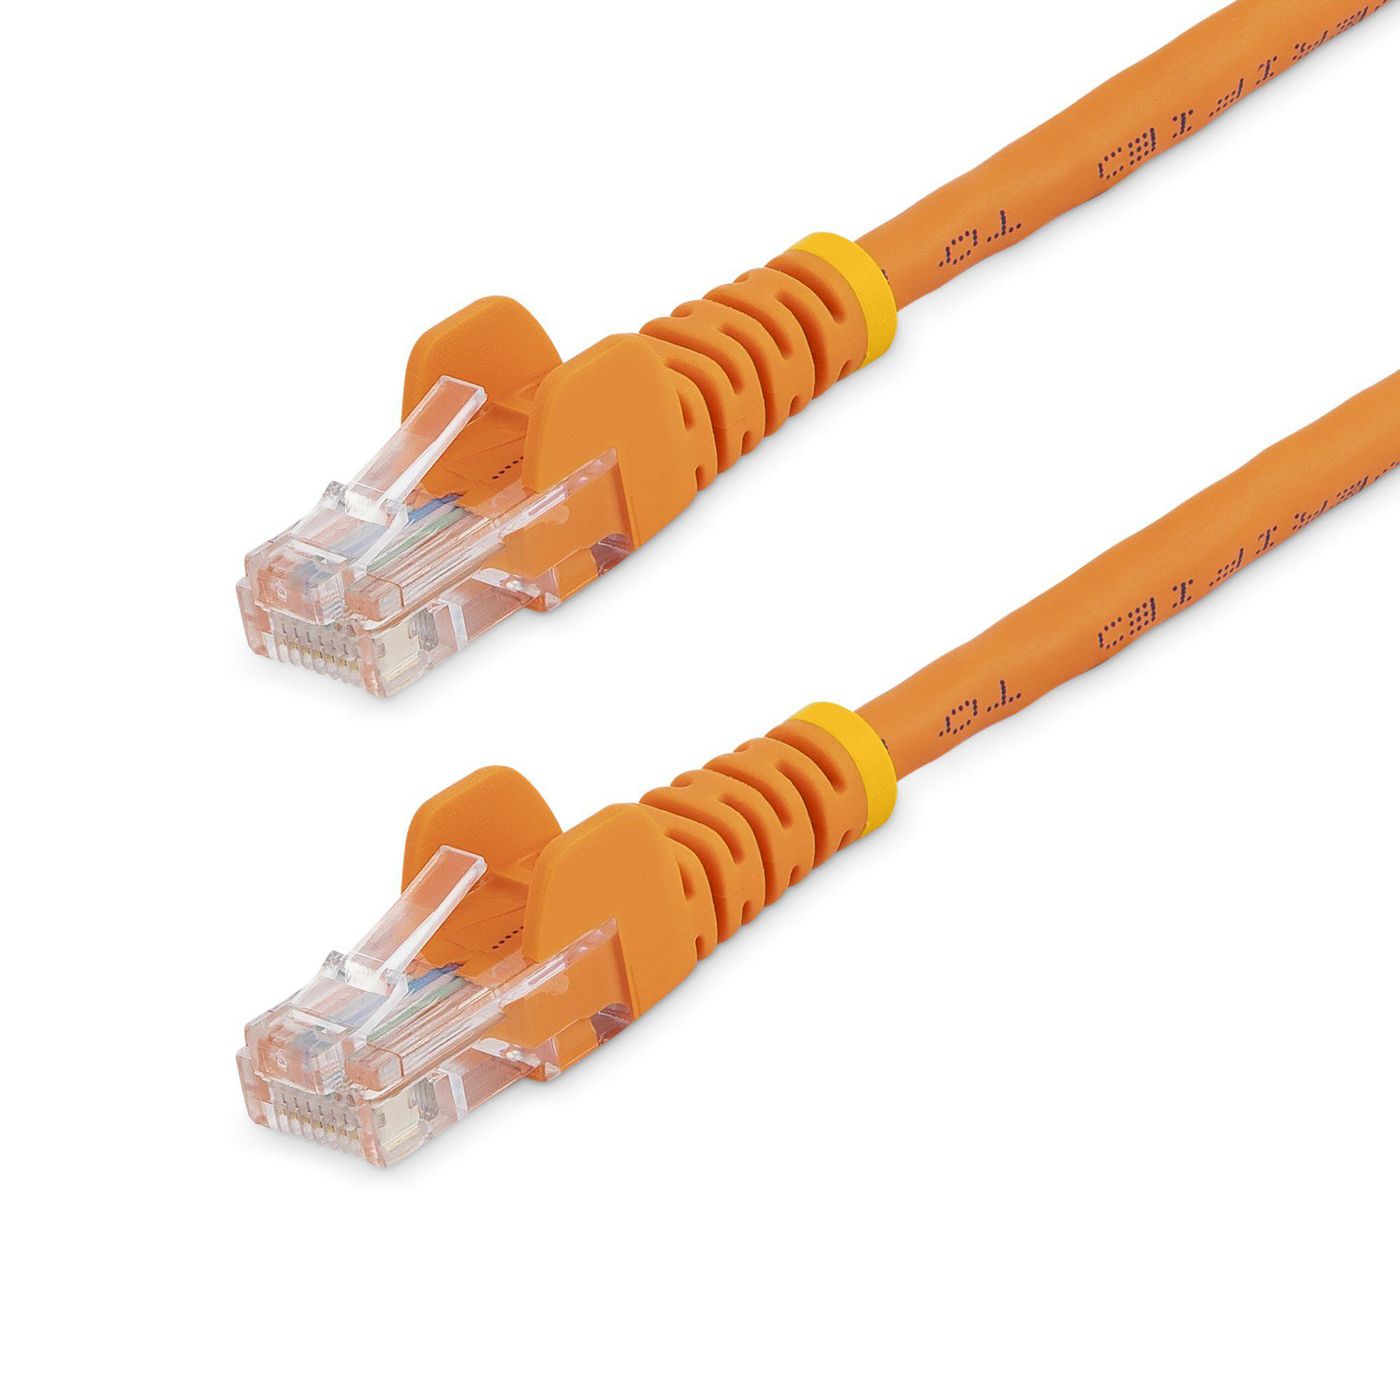 STARTECH.COM 5m Cat5e Ethernet Netzwerkkabel Snagless mit RJ45 - Cat 5e UTP Kabel - Orange